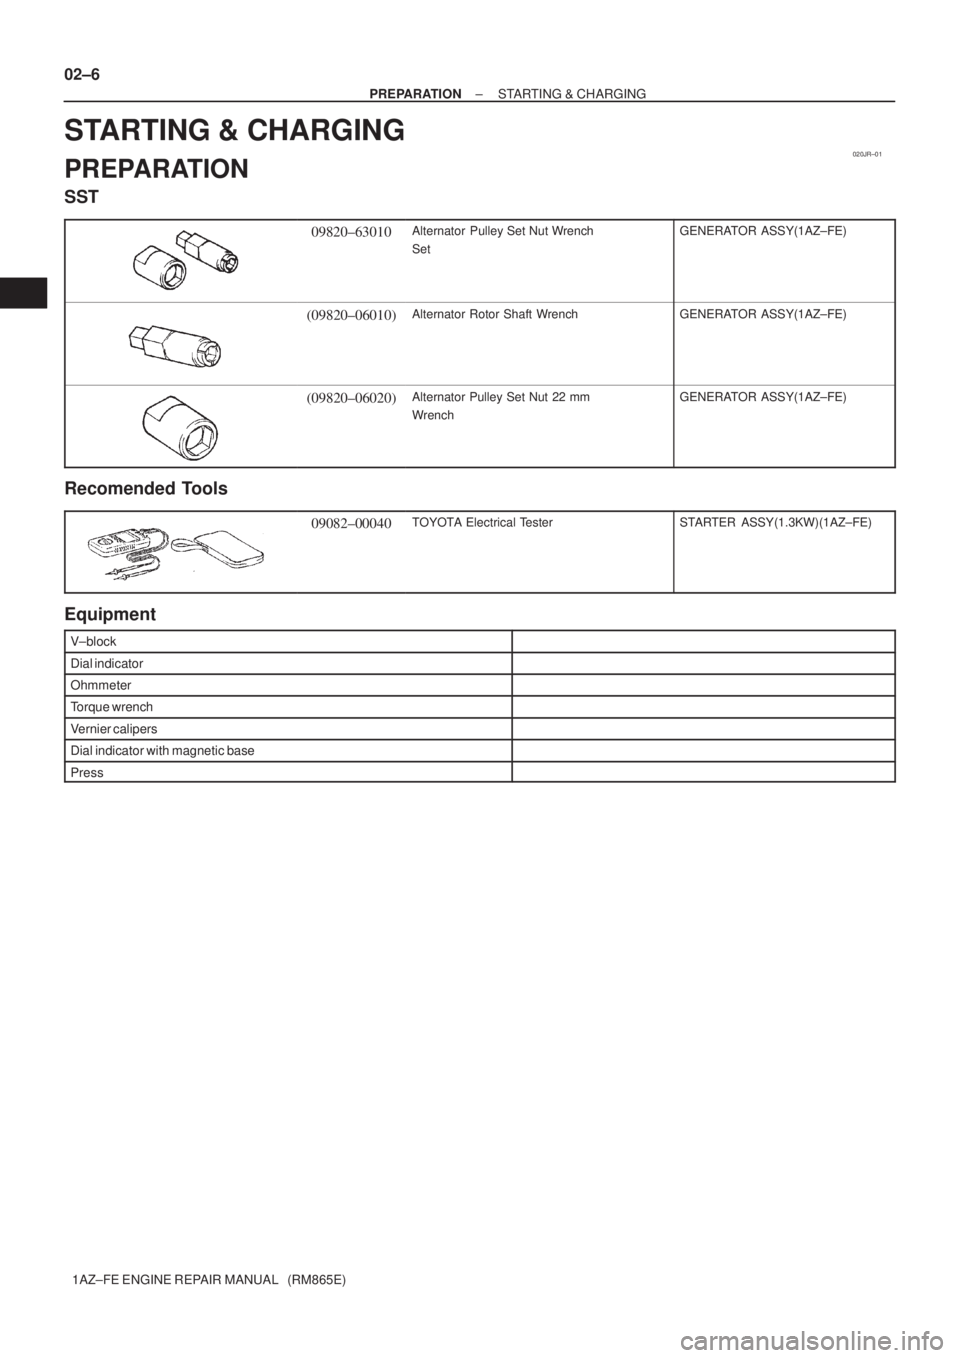 TOYOTA AVENSIS 2005  Service Repair Manual 020JR±01
02±6
± PREPARATIONSTARTING & CHARGING
1AZ±FE ENGINE REPAIR MANUAL   (RM865E)
STARTING & CHARGING
PREPARATION
SST
09820±63010Alternator  Pulley Set Nut Wrench
SetGENERATOR ASSY(1AZ±FE)
(